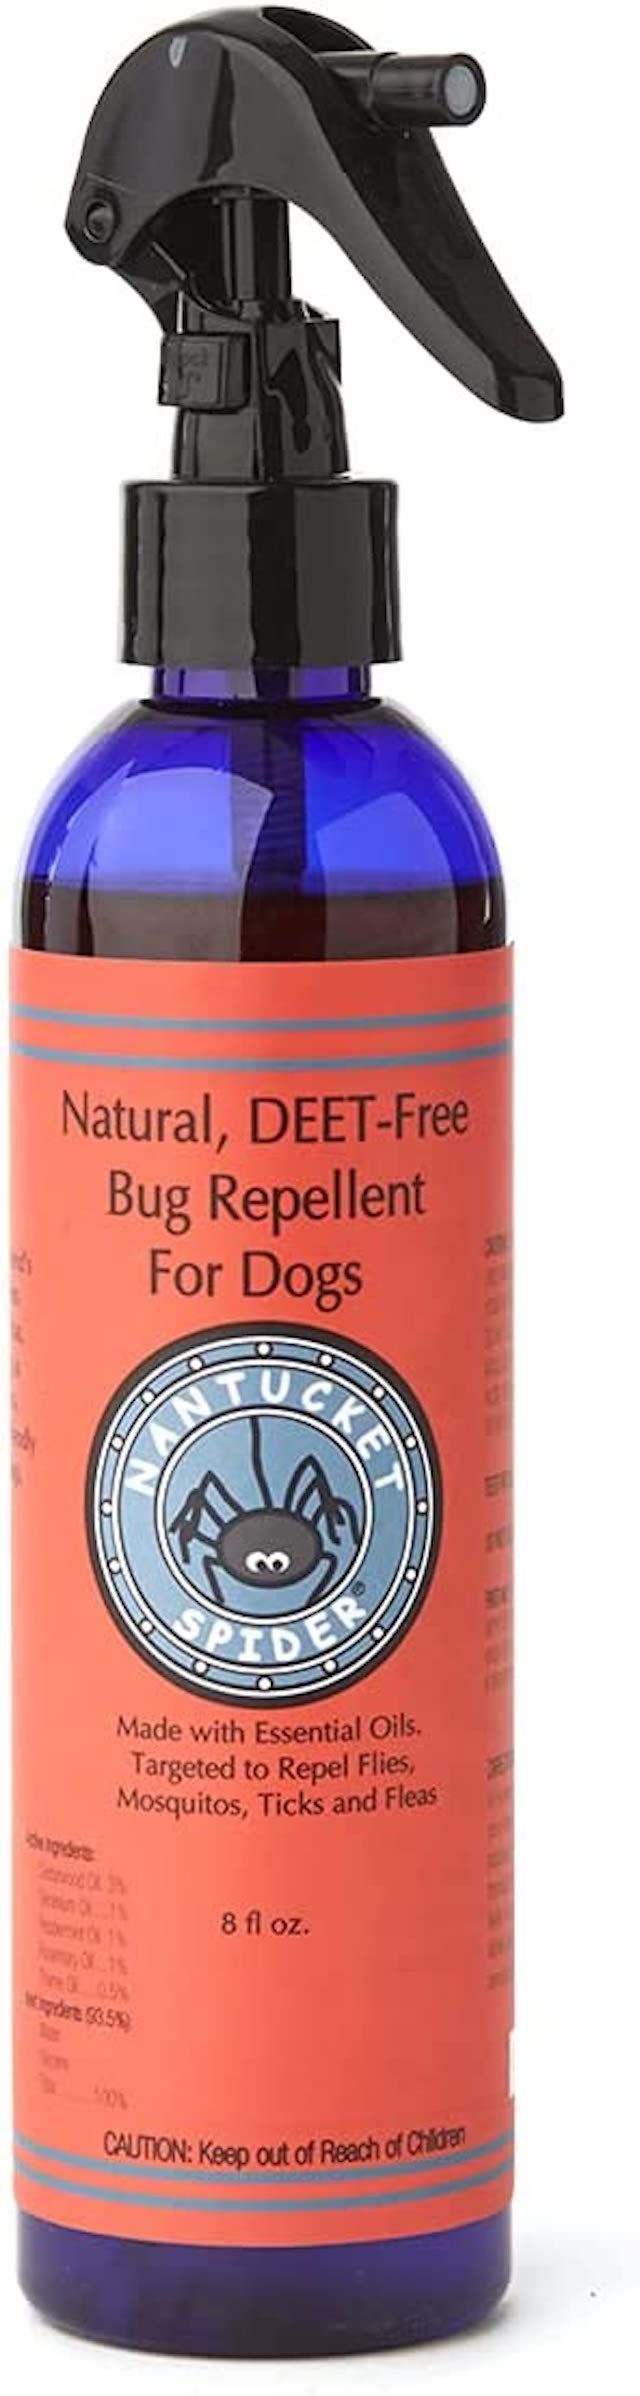 Nantucket Spider Natural Bug Repellent for Dogs